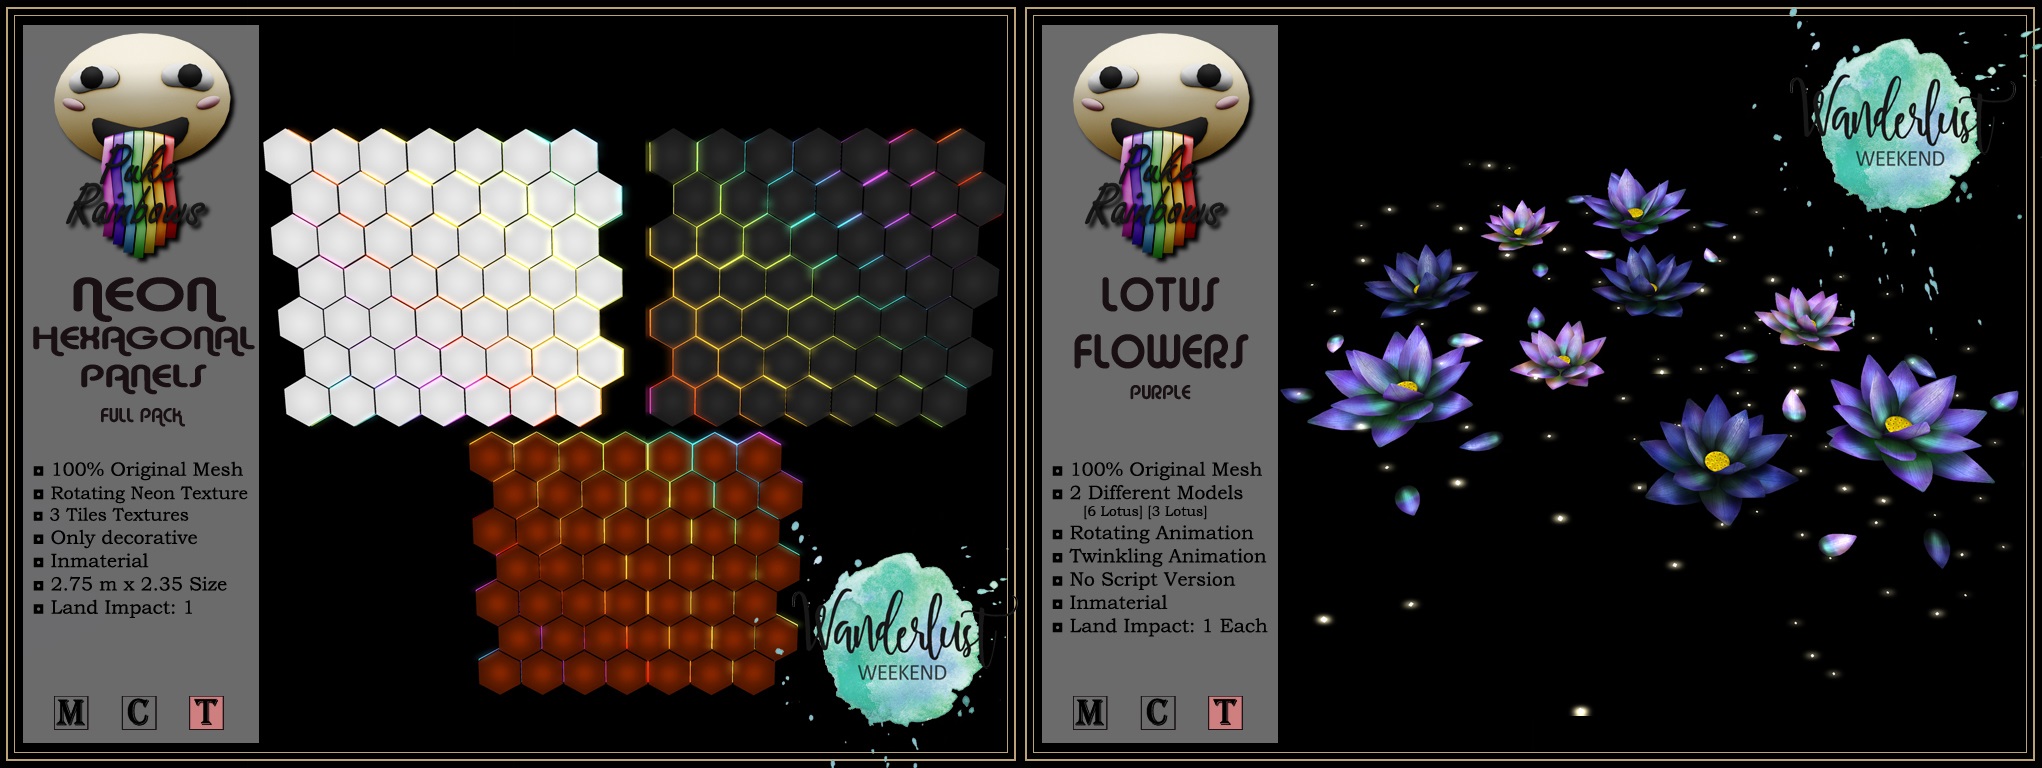 Puke Rainbows – Neon Hexagonal Panels & Lotus Flowers (Purple)